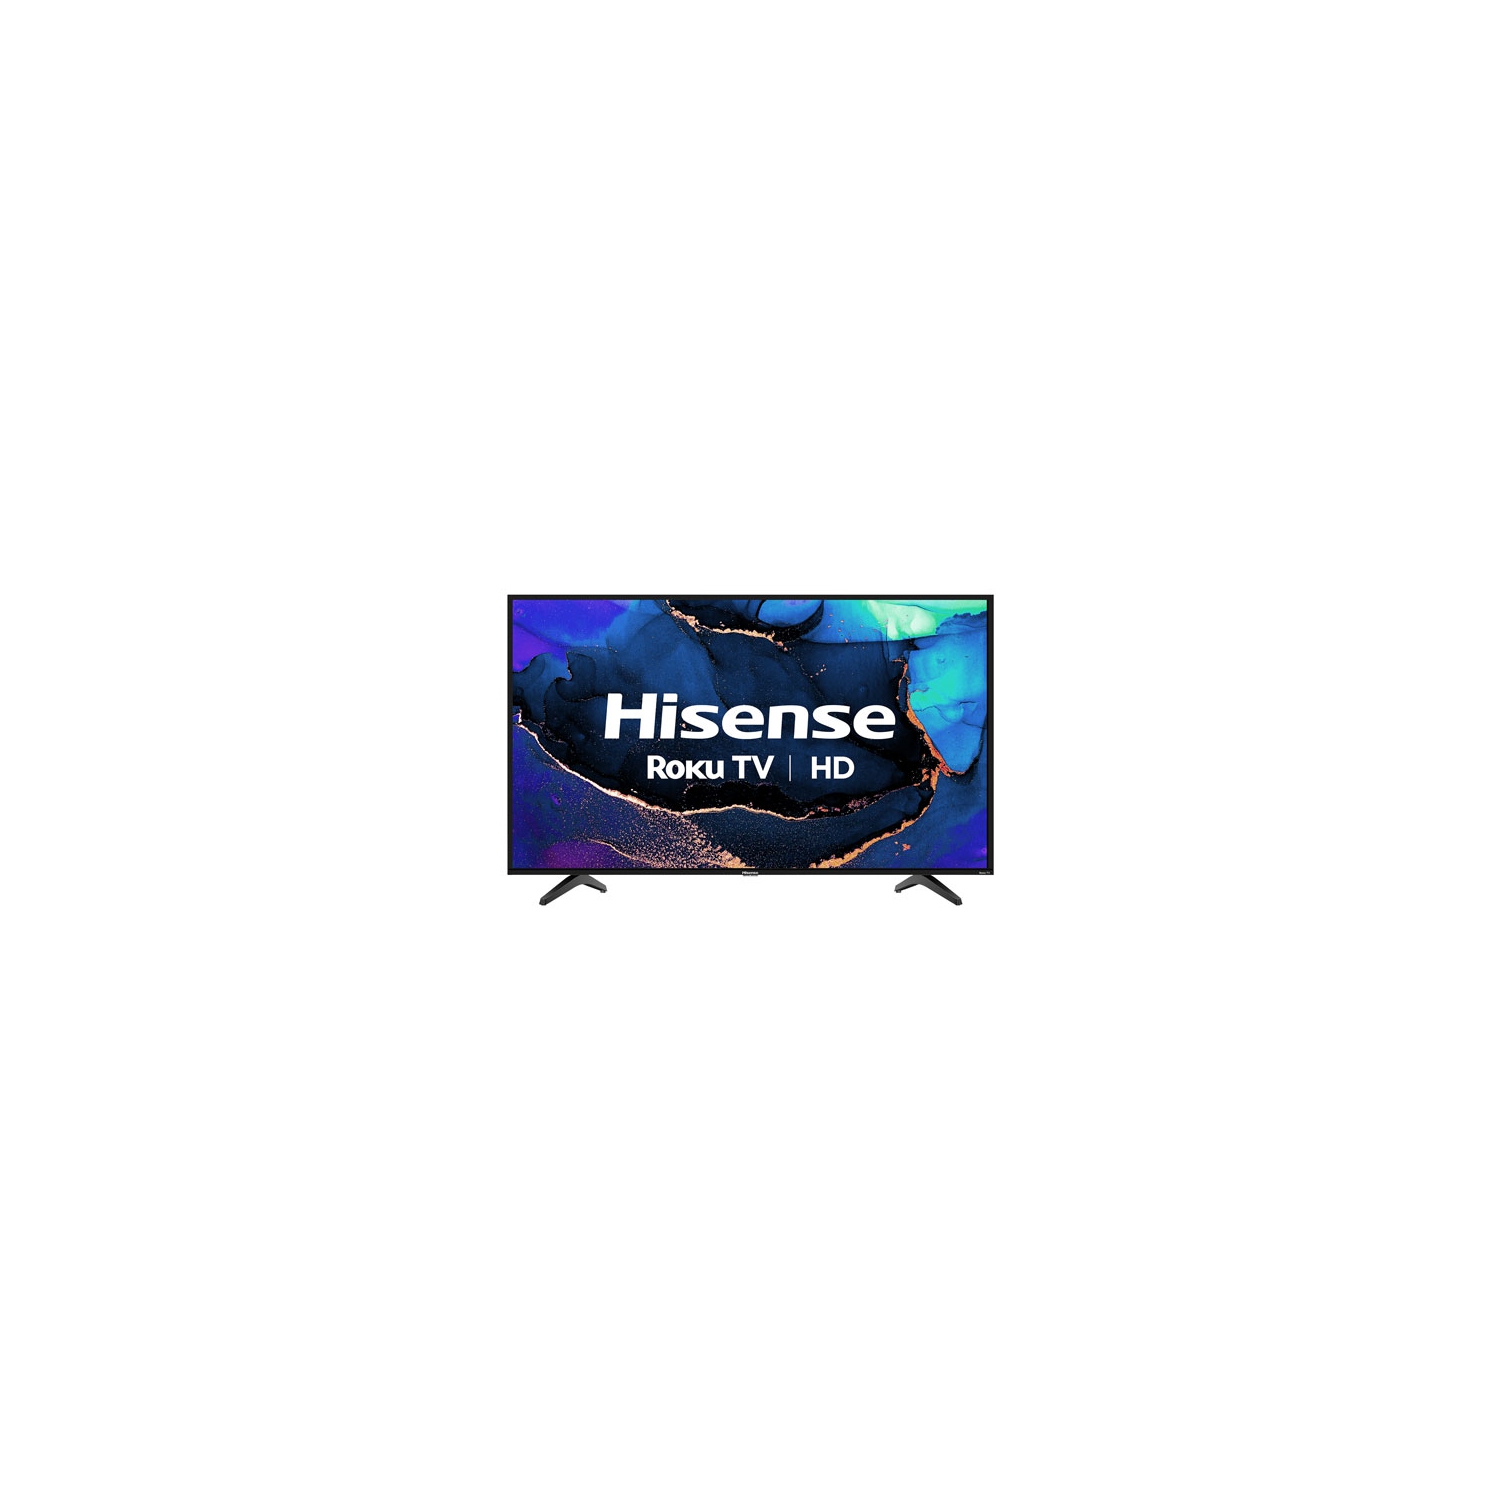 Hisense 32" 720p HD LED Roku Smart TV (32H4G) - 2020 - Open Box